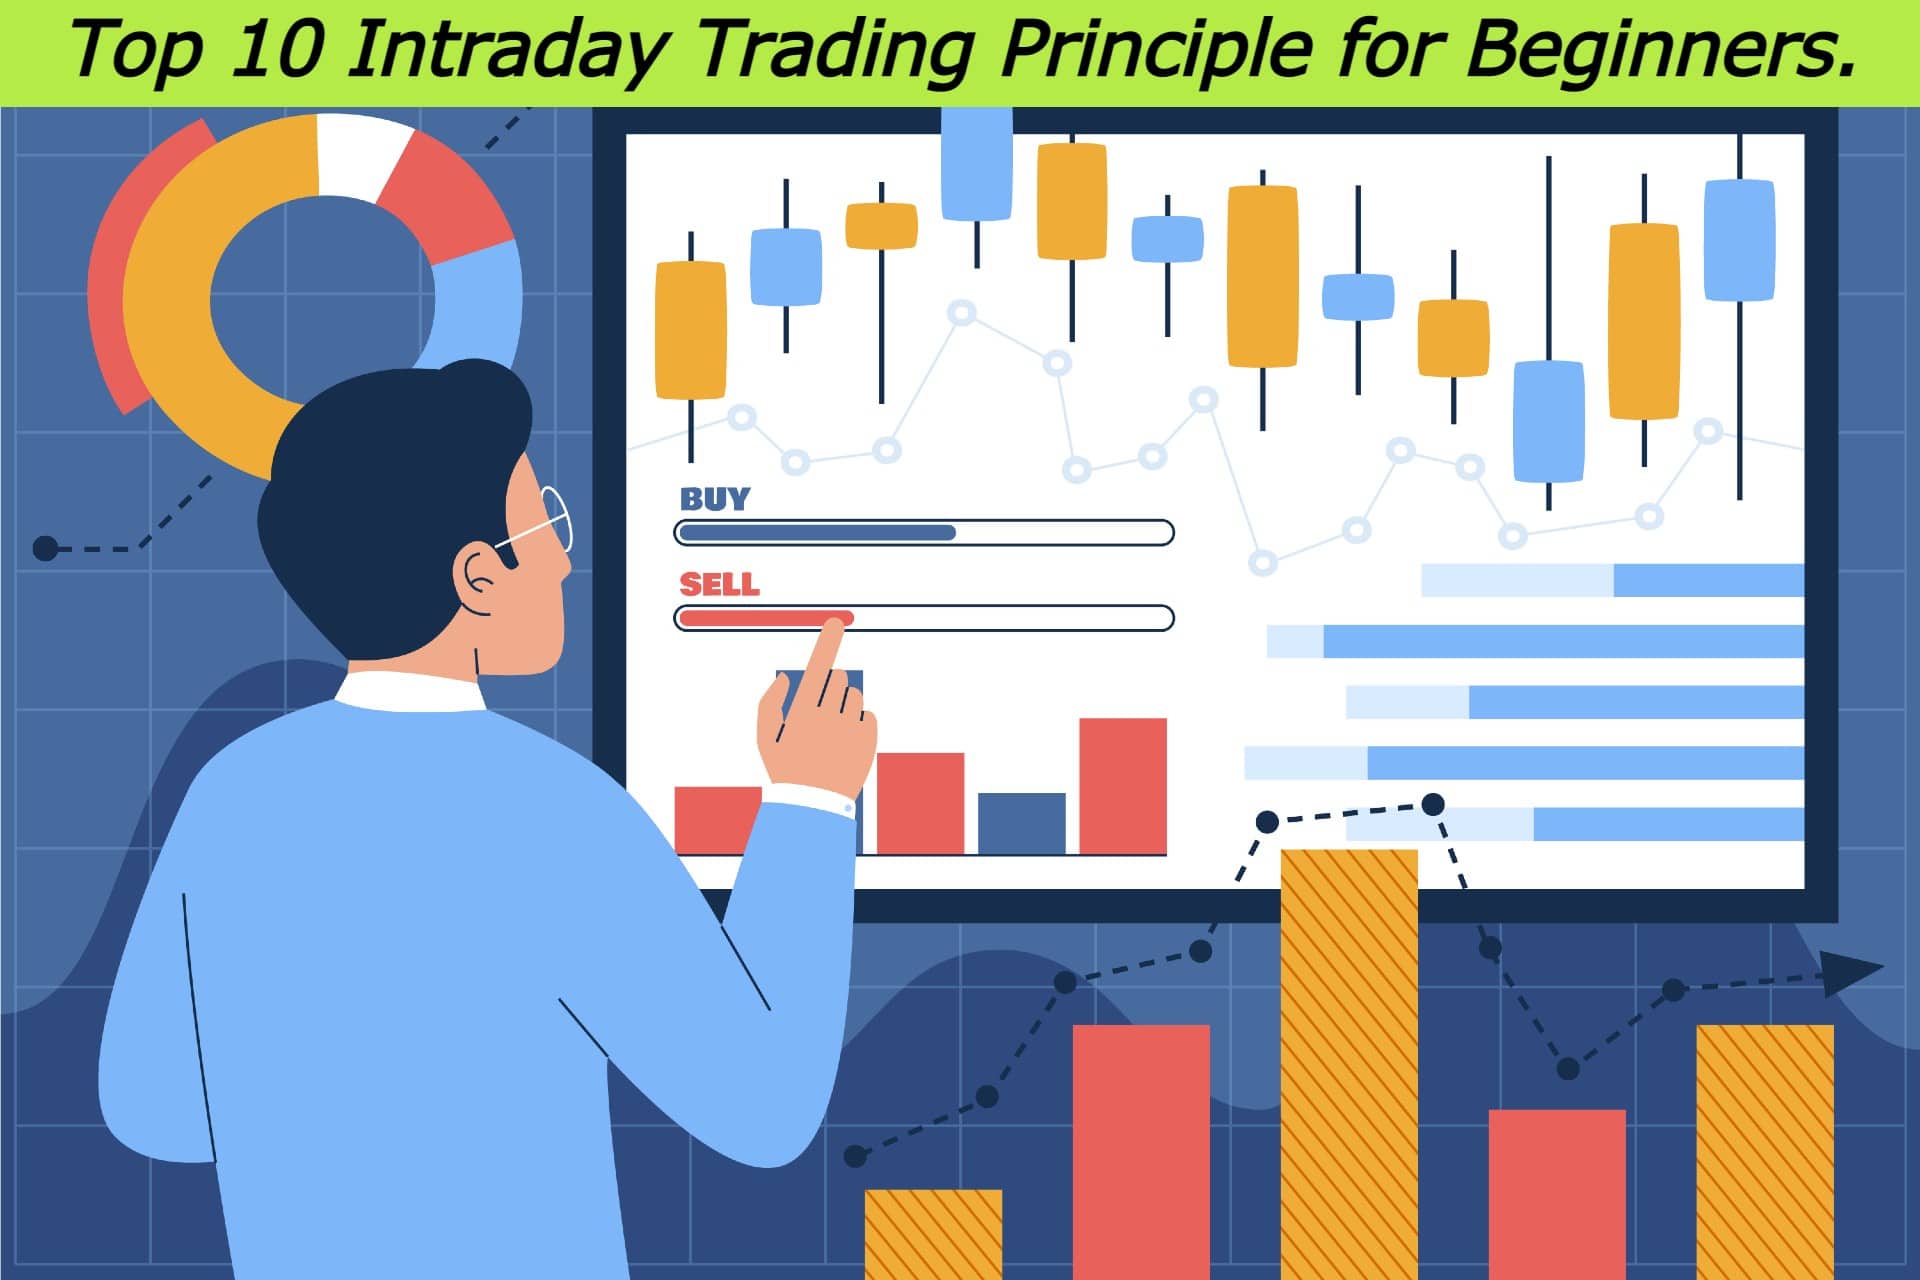 Top 10 Intraday Trading Principles